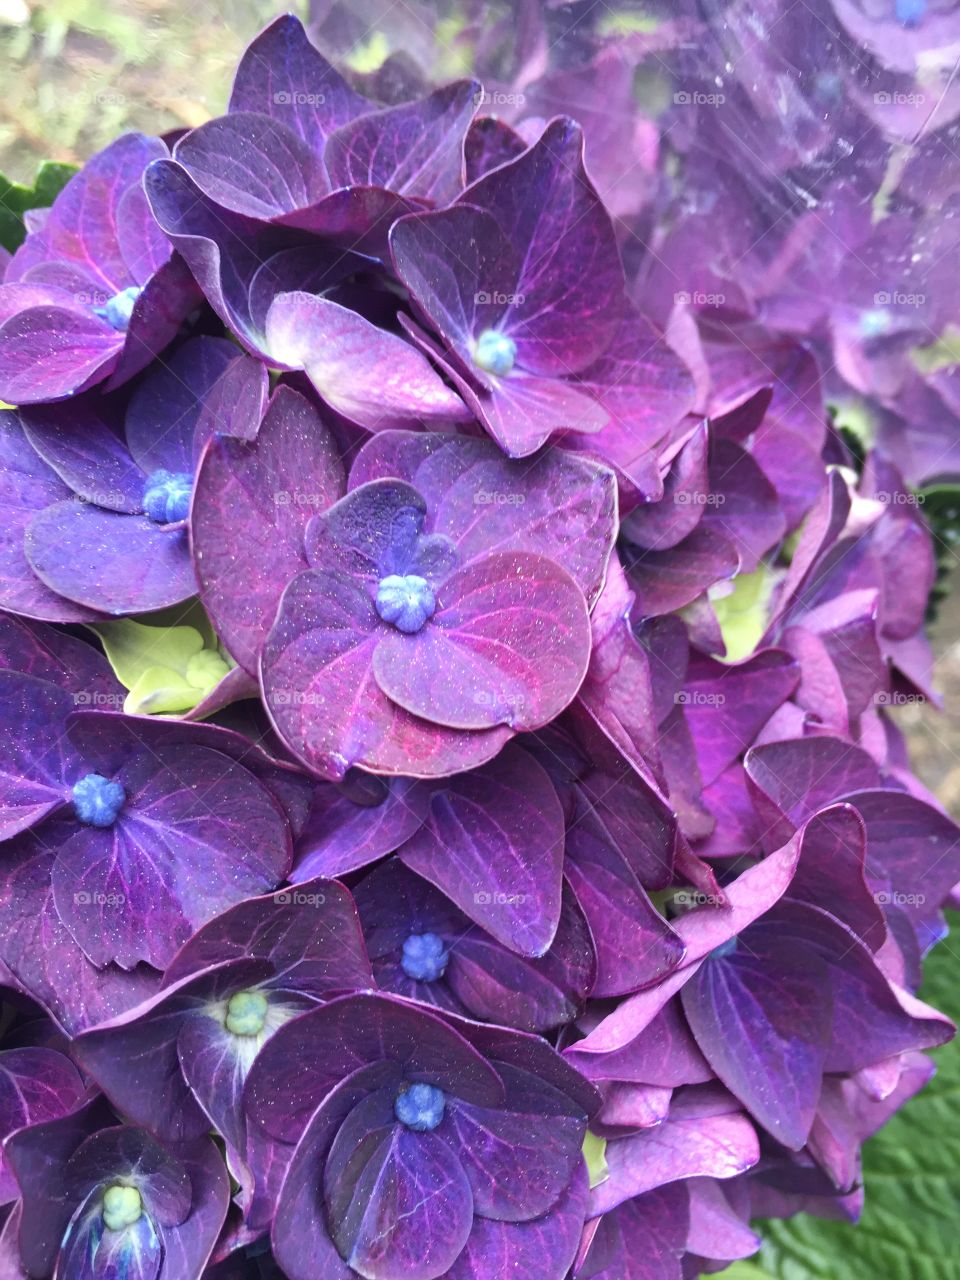 Gorgeous dark purple and blue hydrangeas flowers